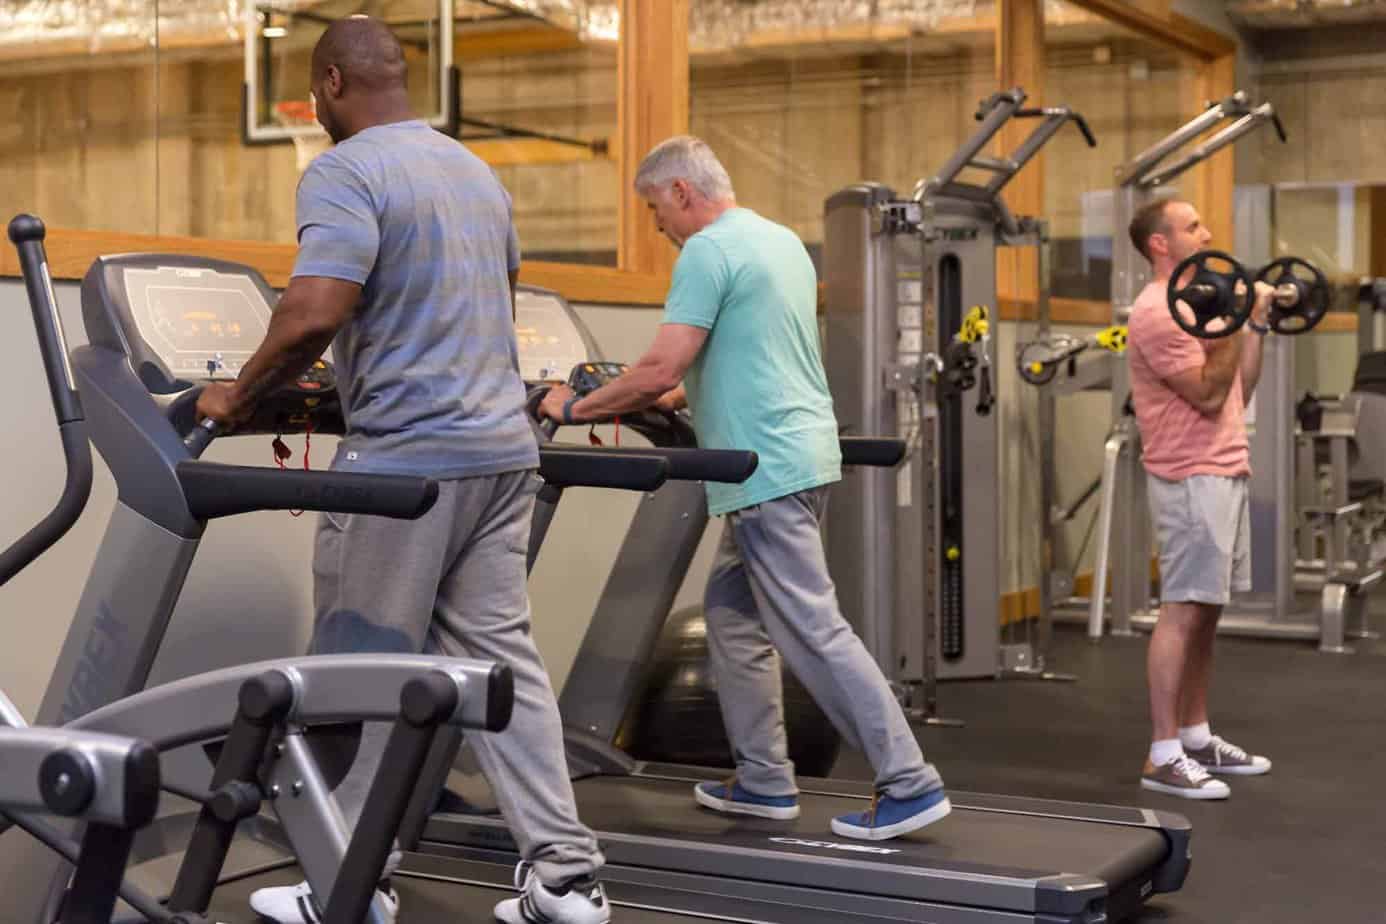 Men at Mountainside rehab’s gym exercising to battle withdrawal symptoms.